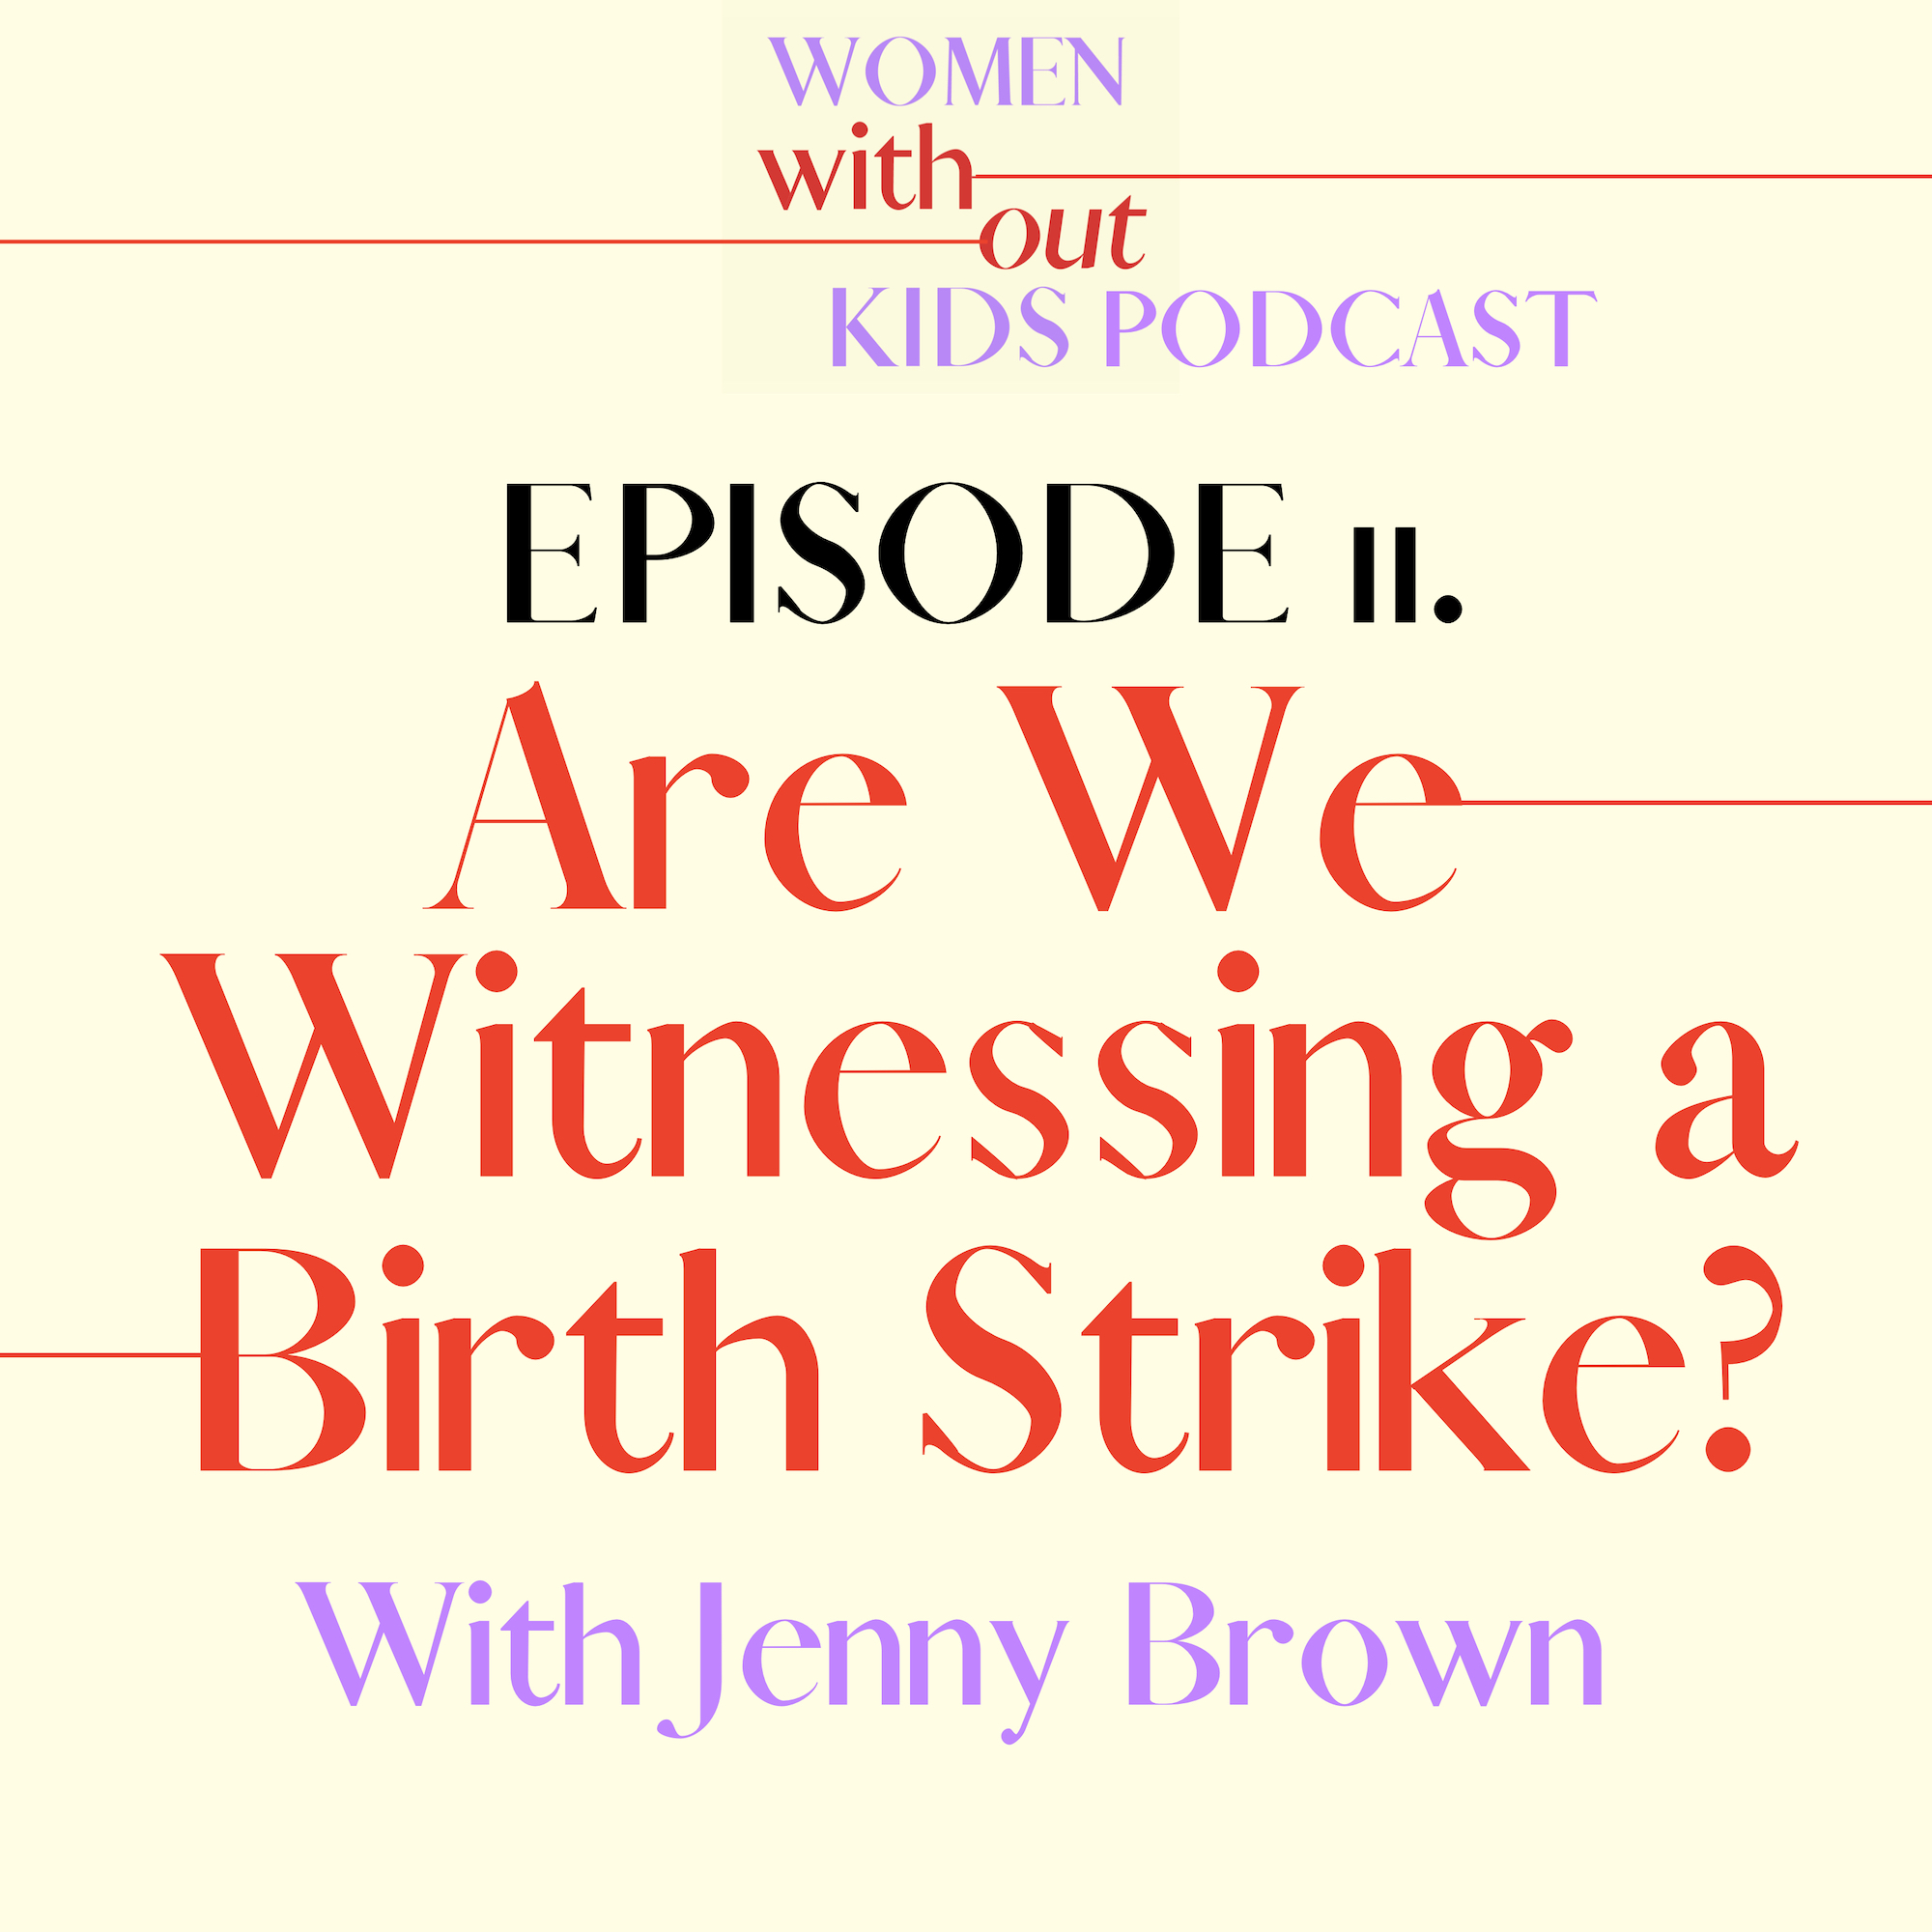 Jenny Brown birth strike women without kids podcast ruby warrington